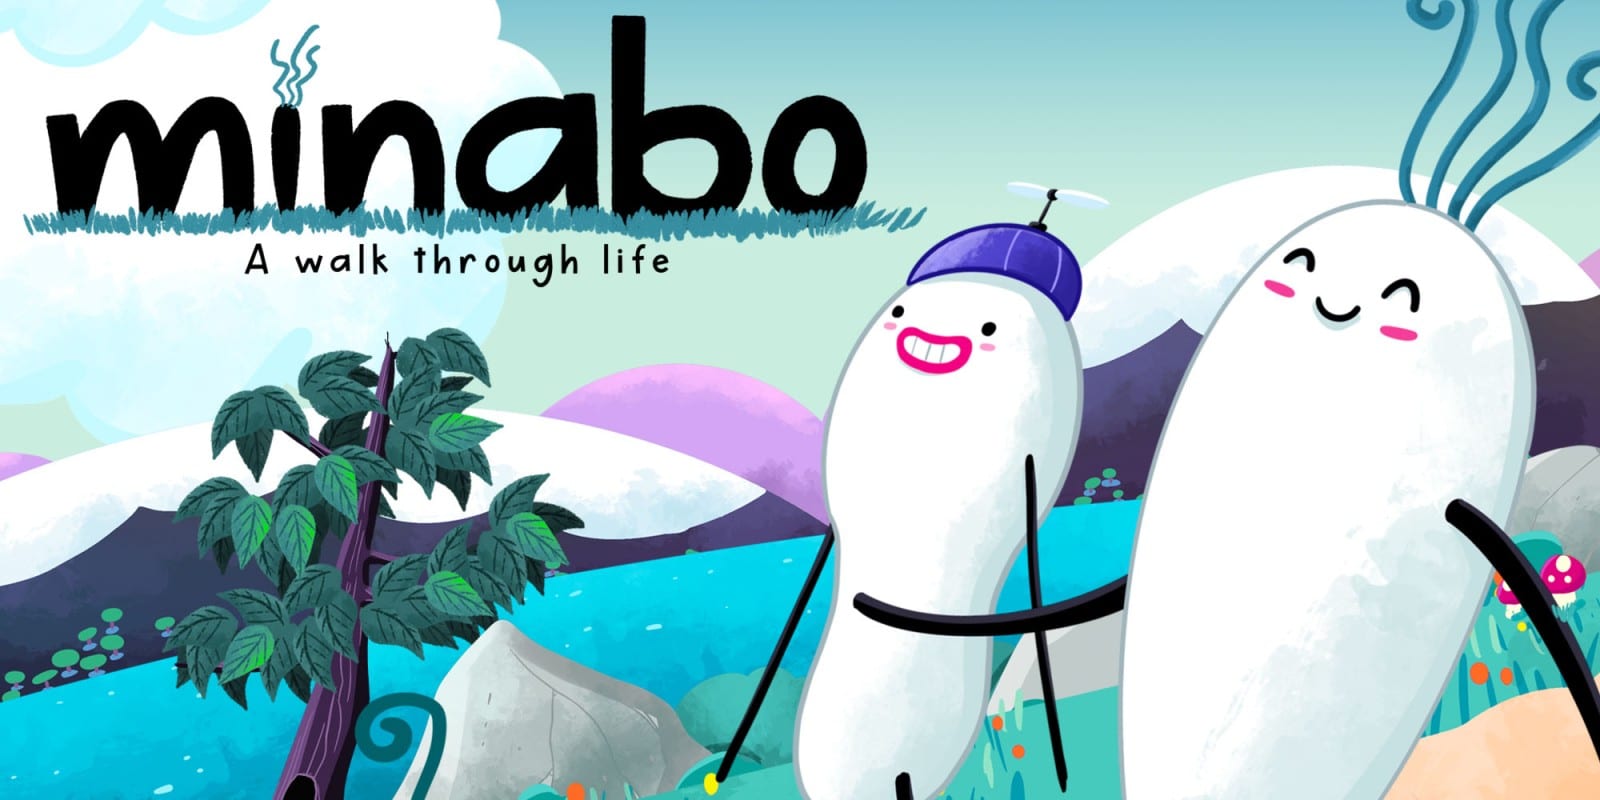 minabo - a walk through life recensione